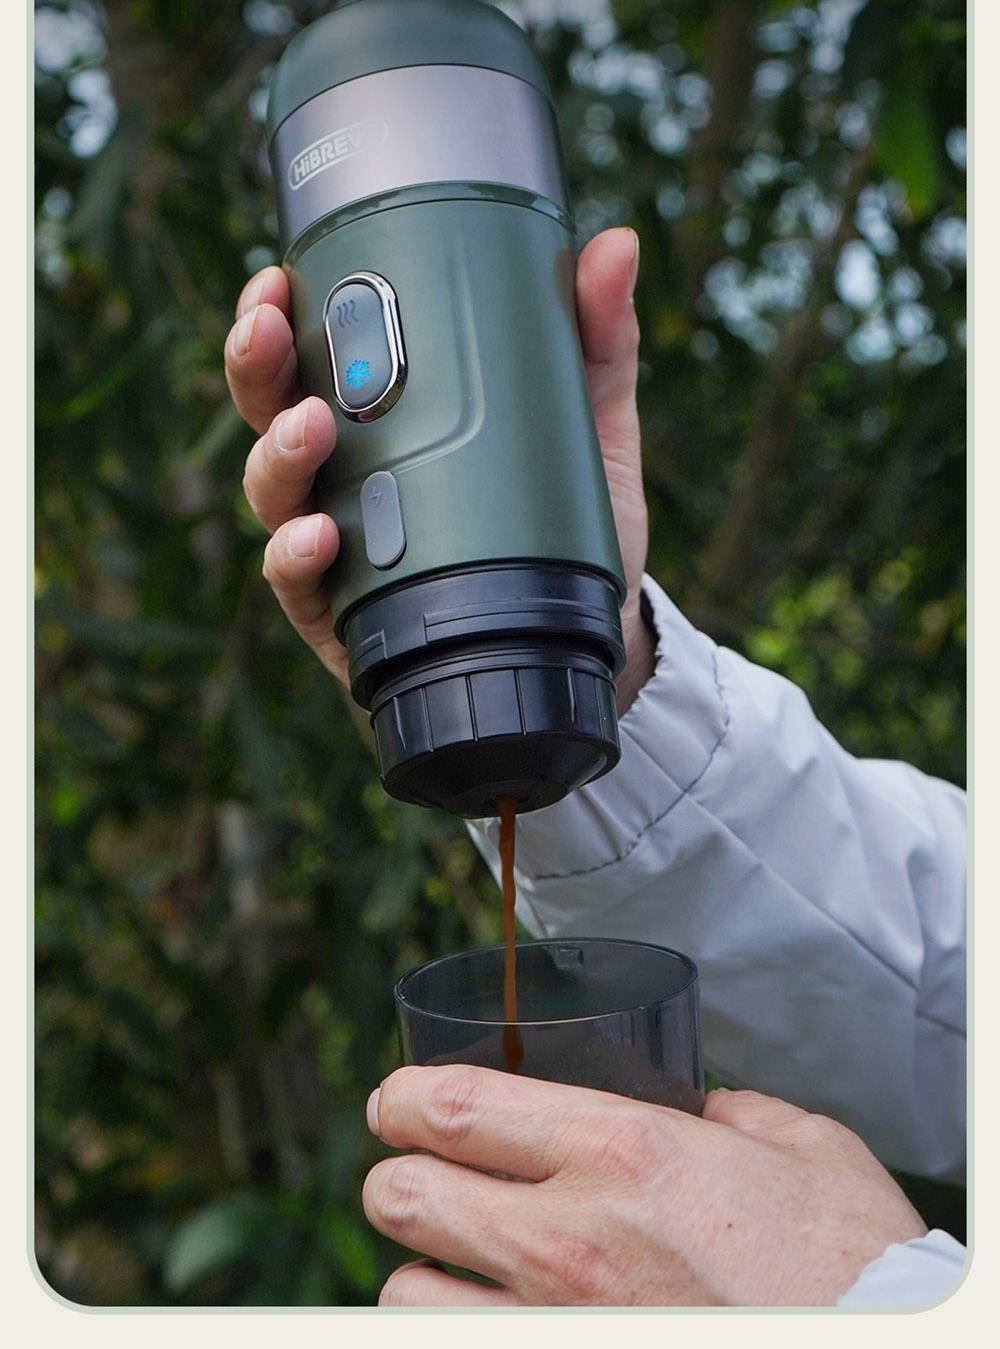 Portable Coffee Maker 12V Travel Espresso Machine 15 Bar Pressure